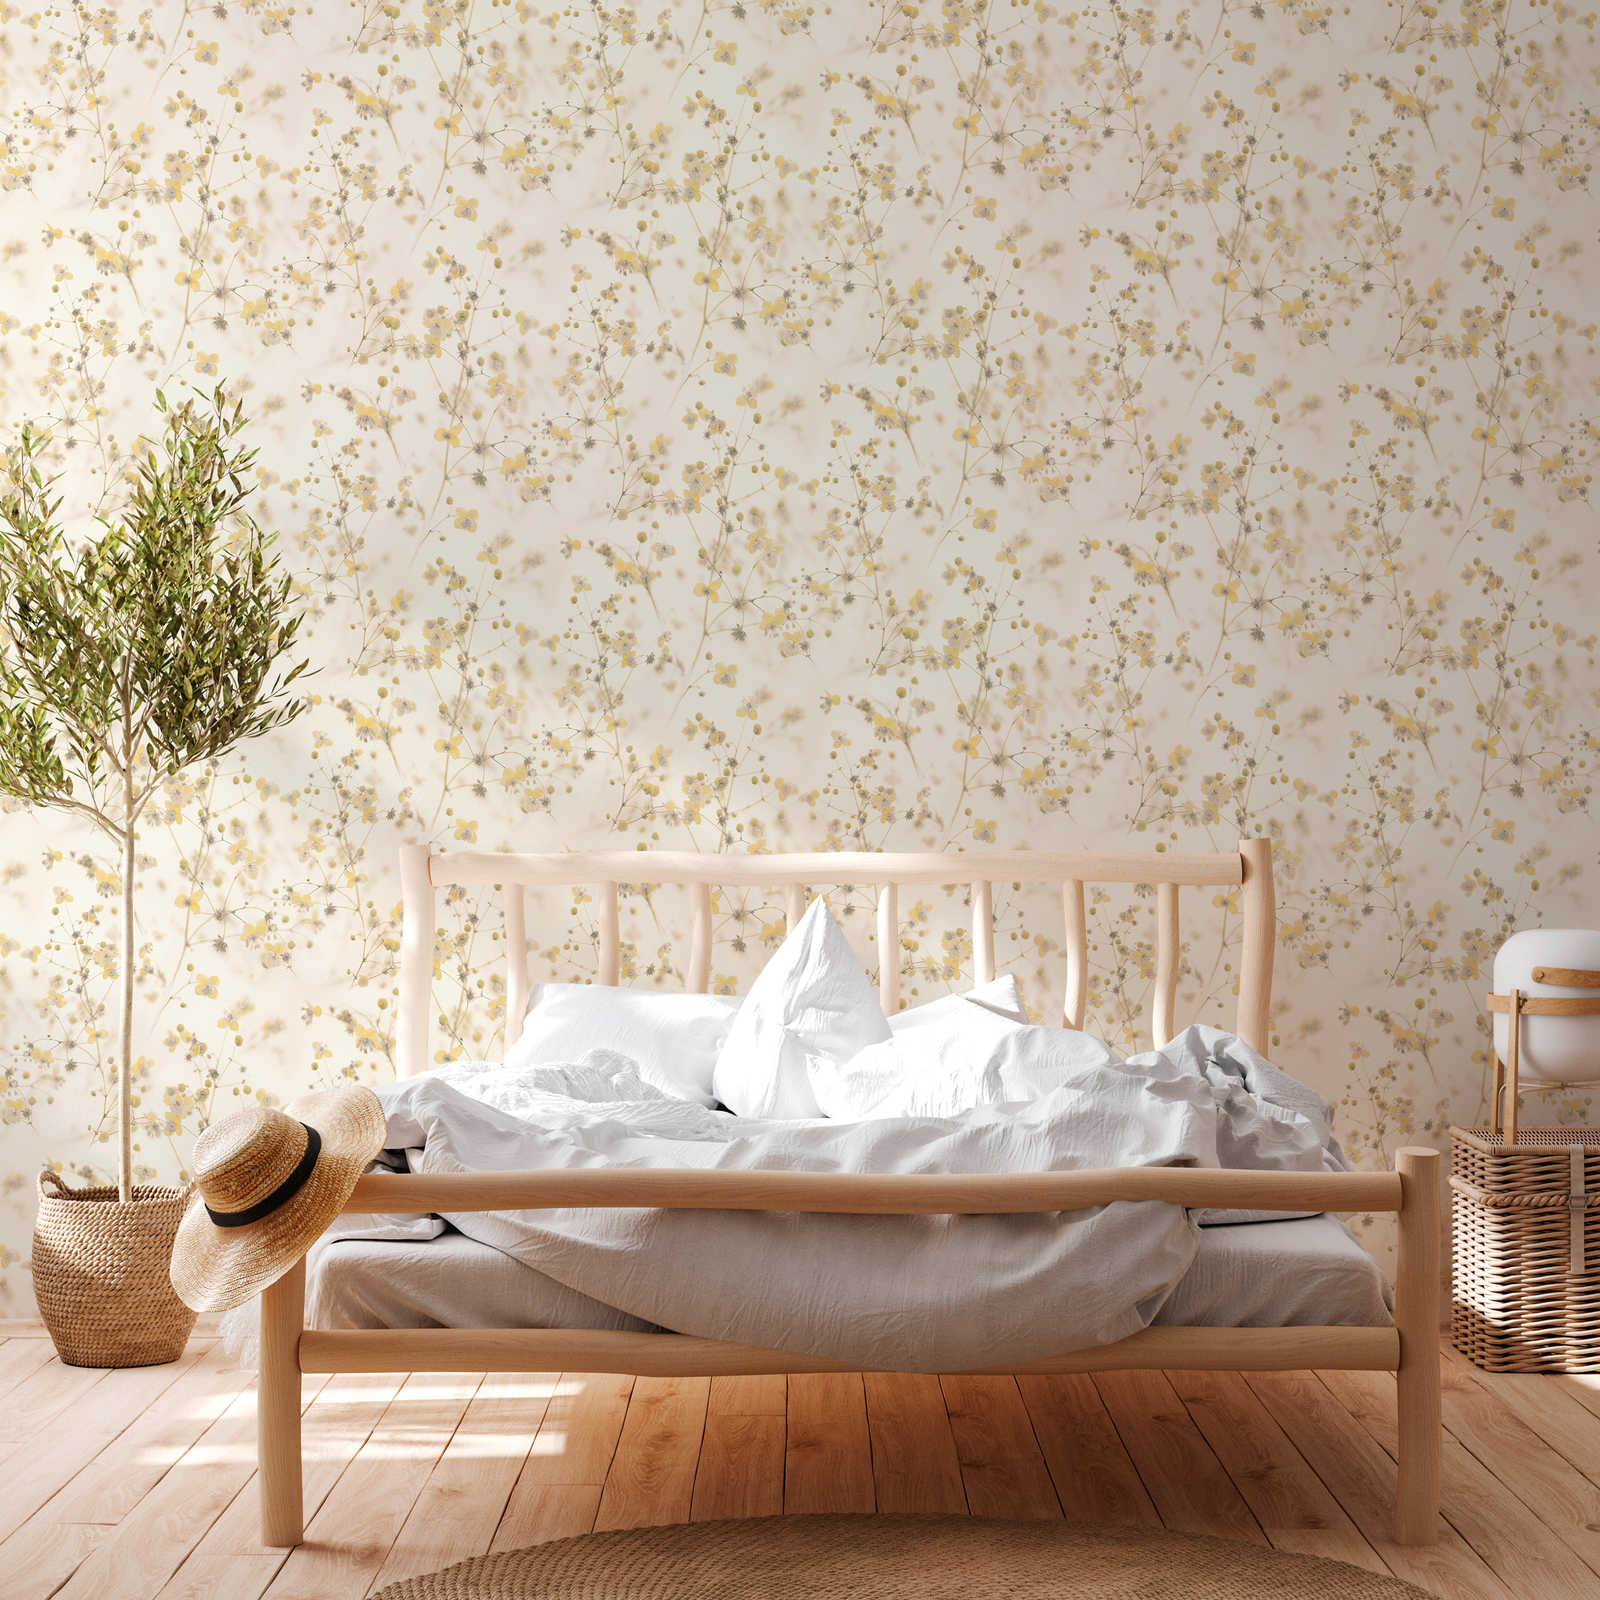             Flowers wallpaper cottage core design - cream, yellow
        